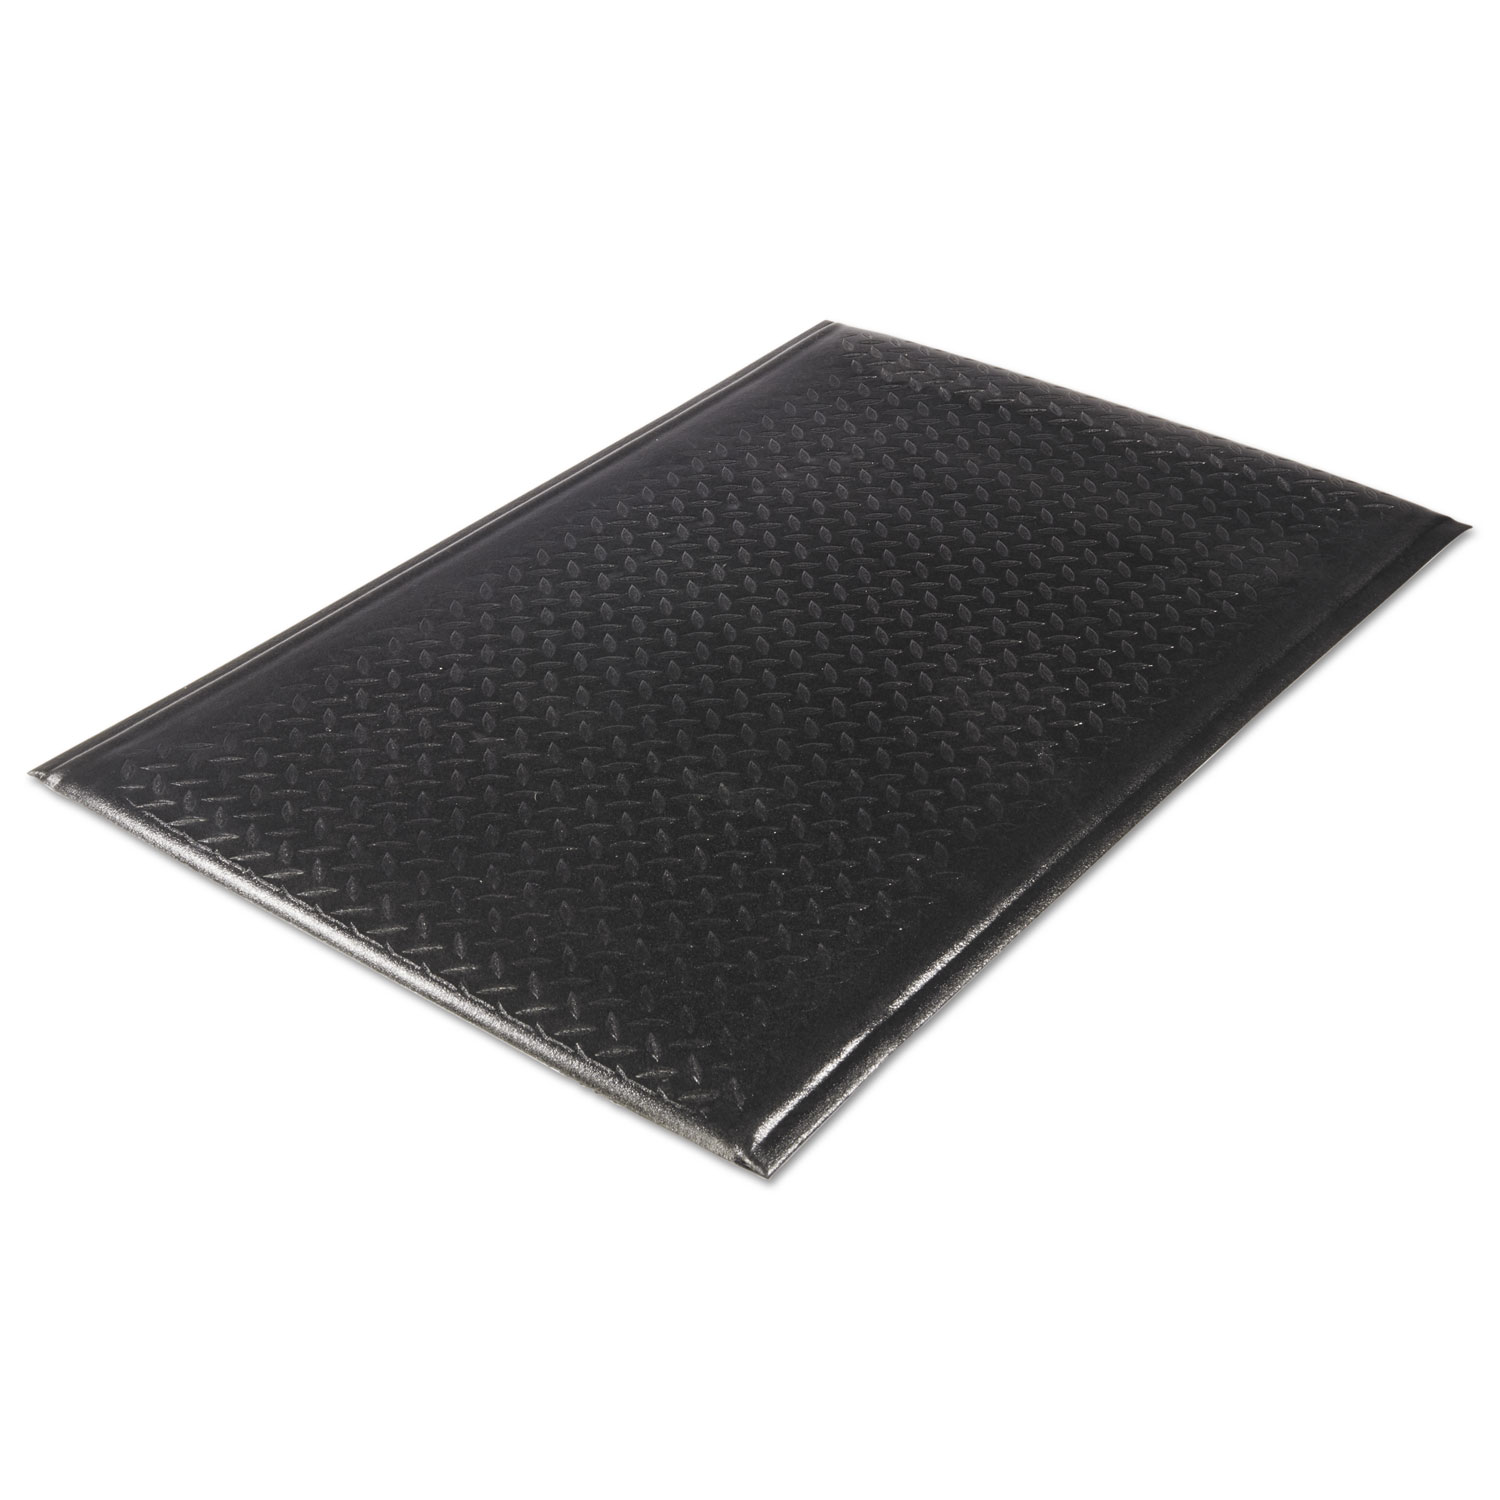  Guardian 24030501DIAM Soft Step Supreme Anti-Fatigue Floor Mat, 36 x 60, Black (MLL24030501DIAM) 